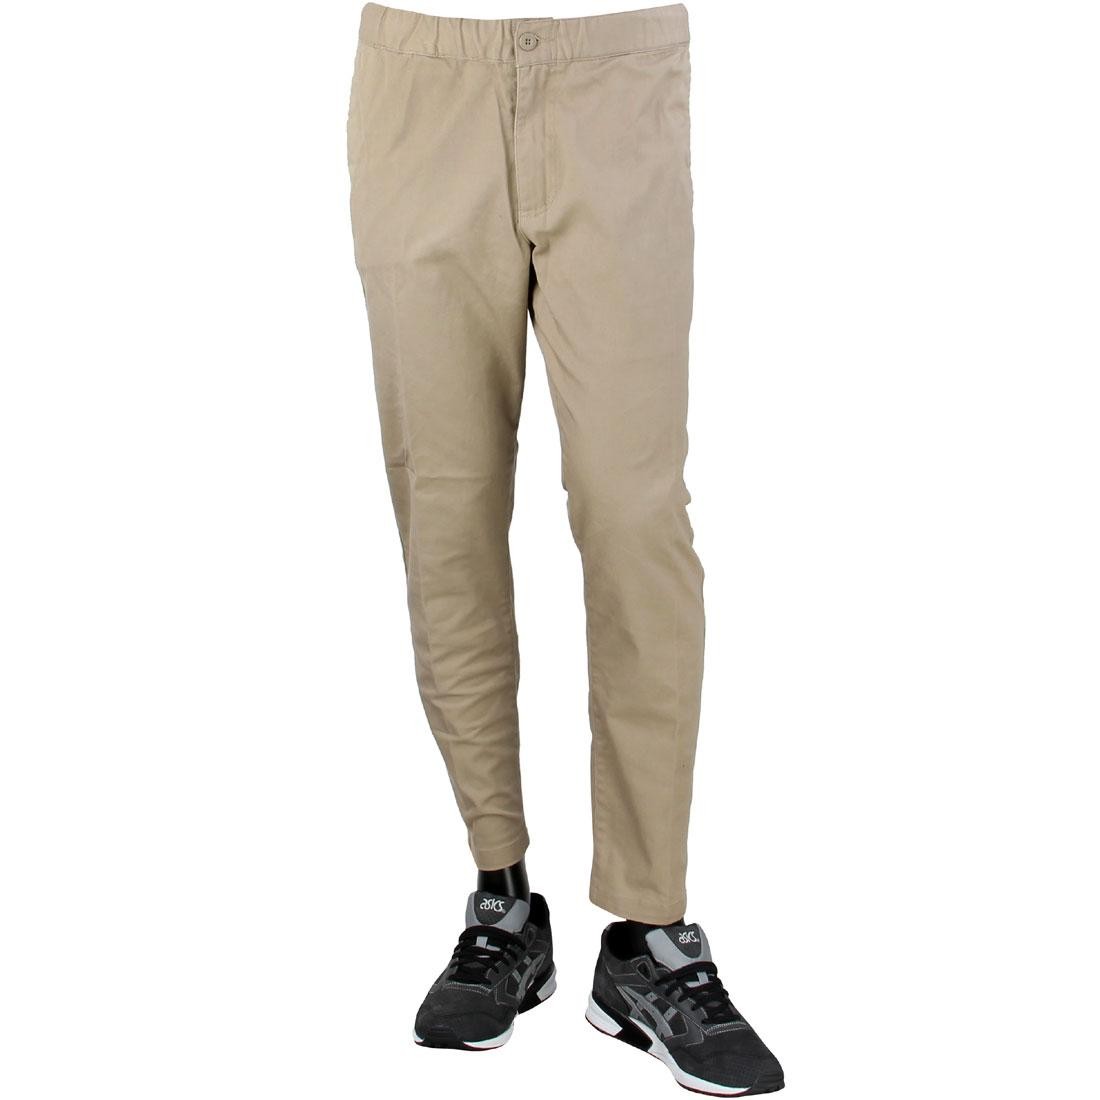 Obey working Man Slim Chino Pants Brand New Khaki Sizes 30  eBay